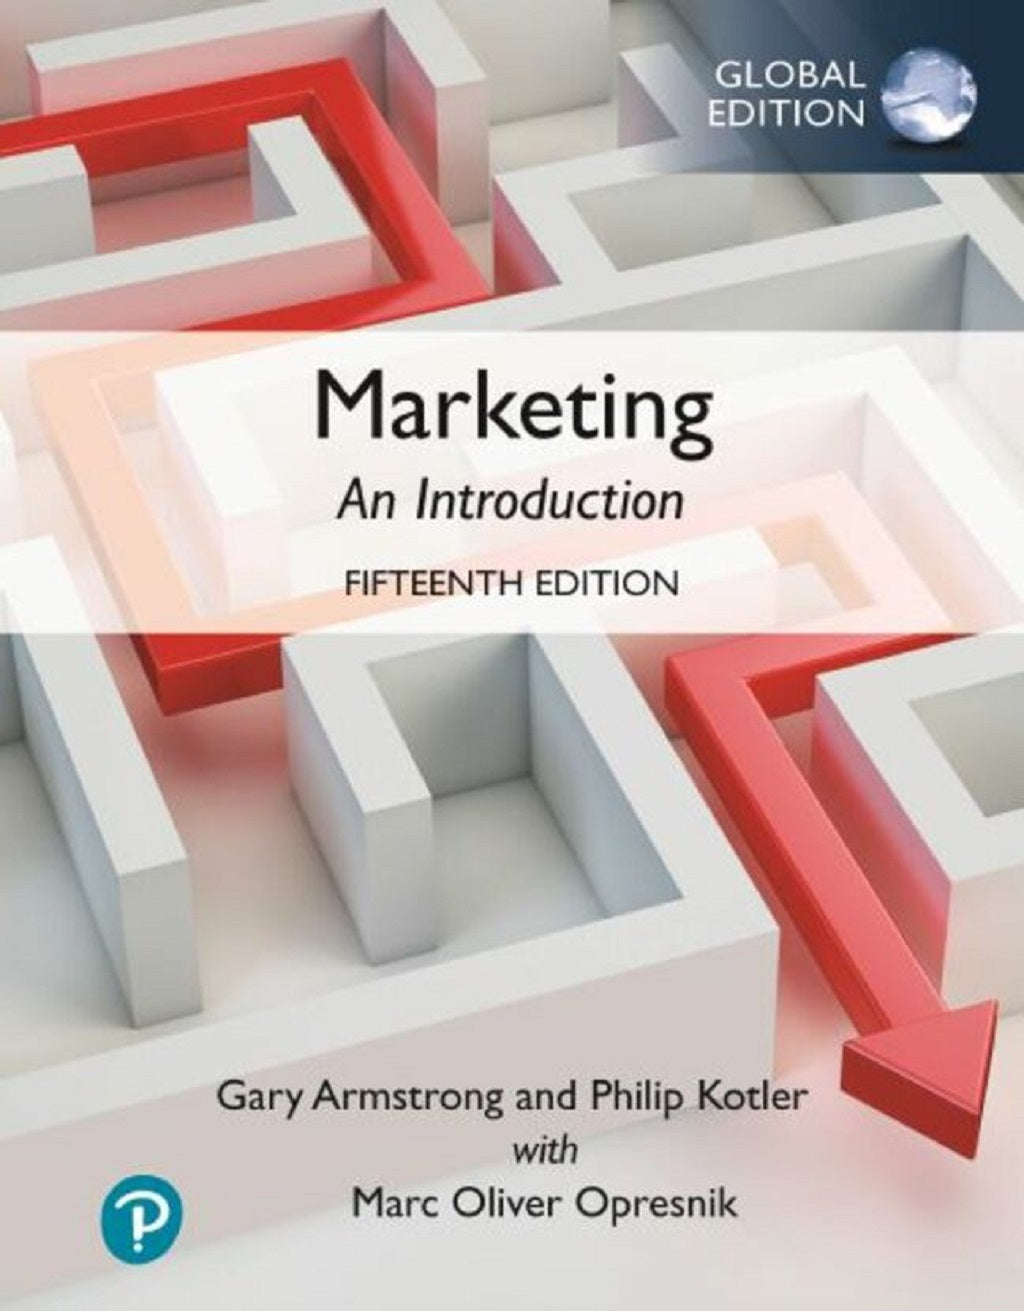 Kotler, Marketing an introduction, 15th edition MyLab Marketing